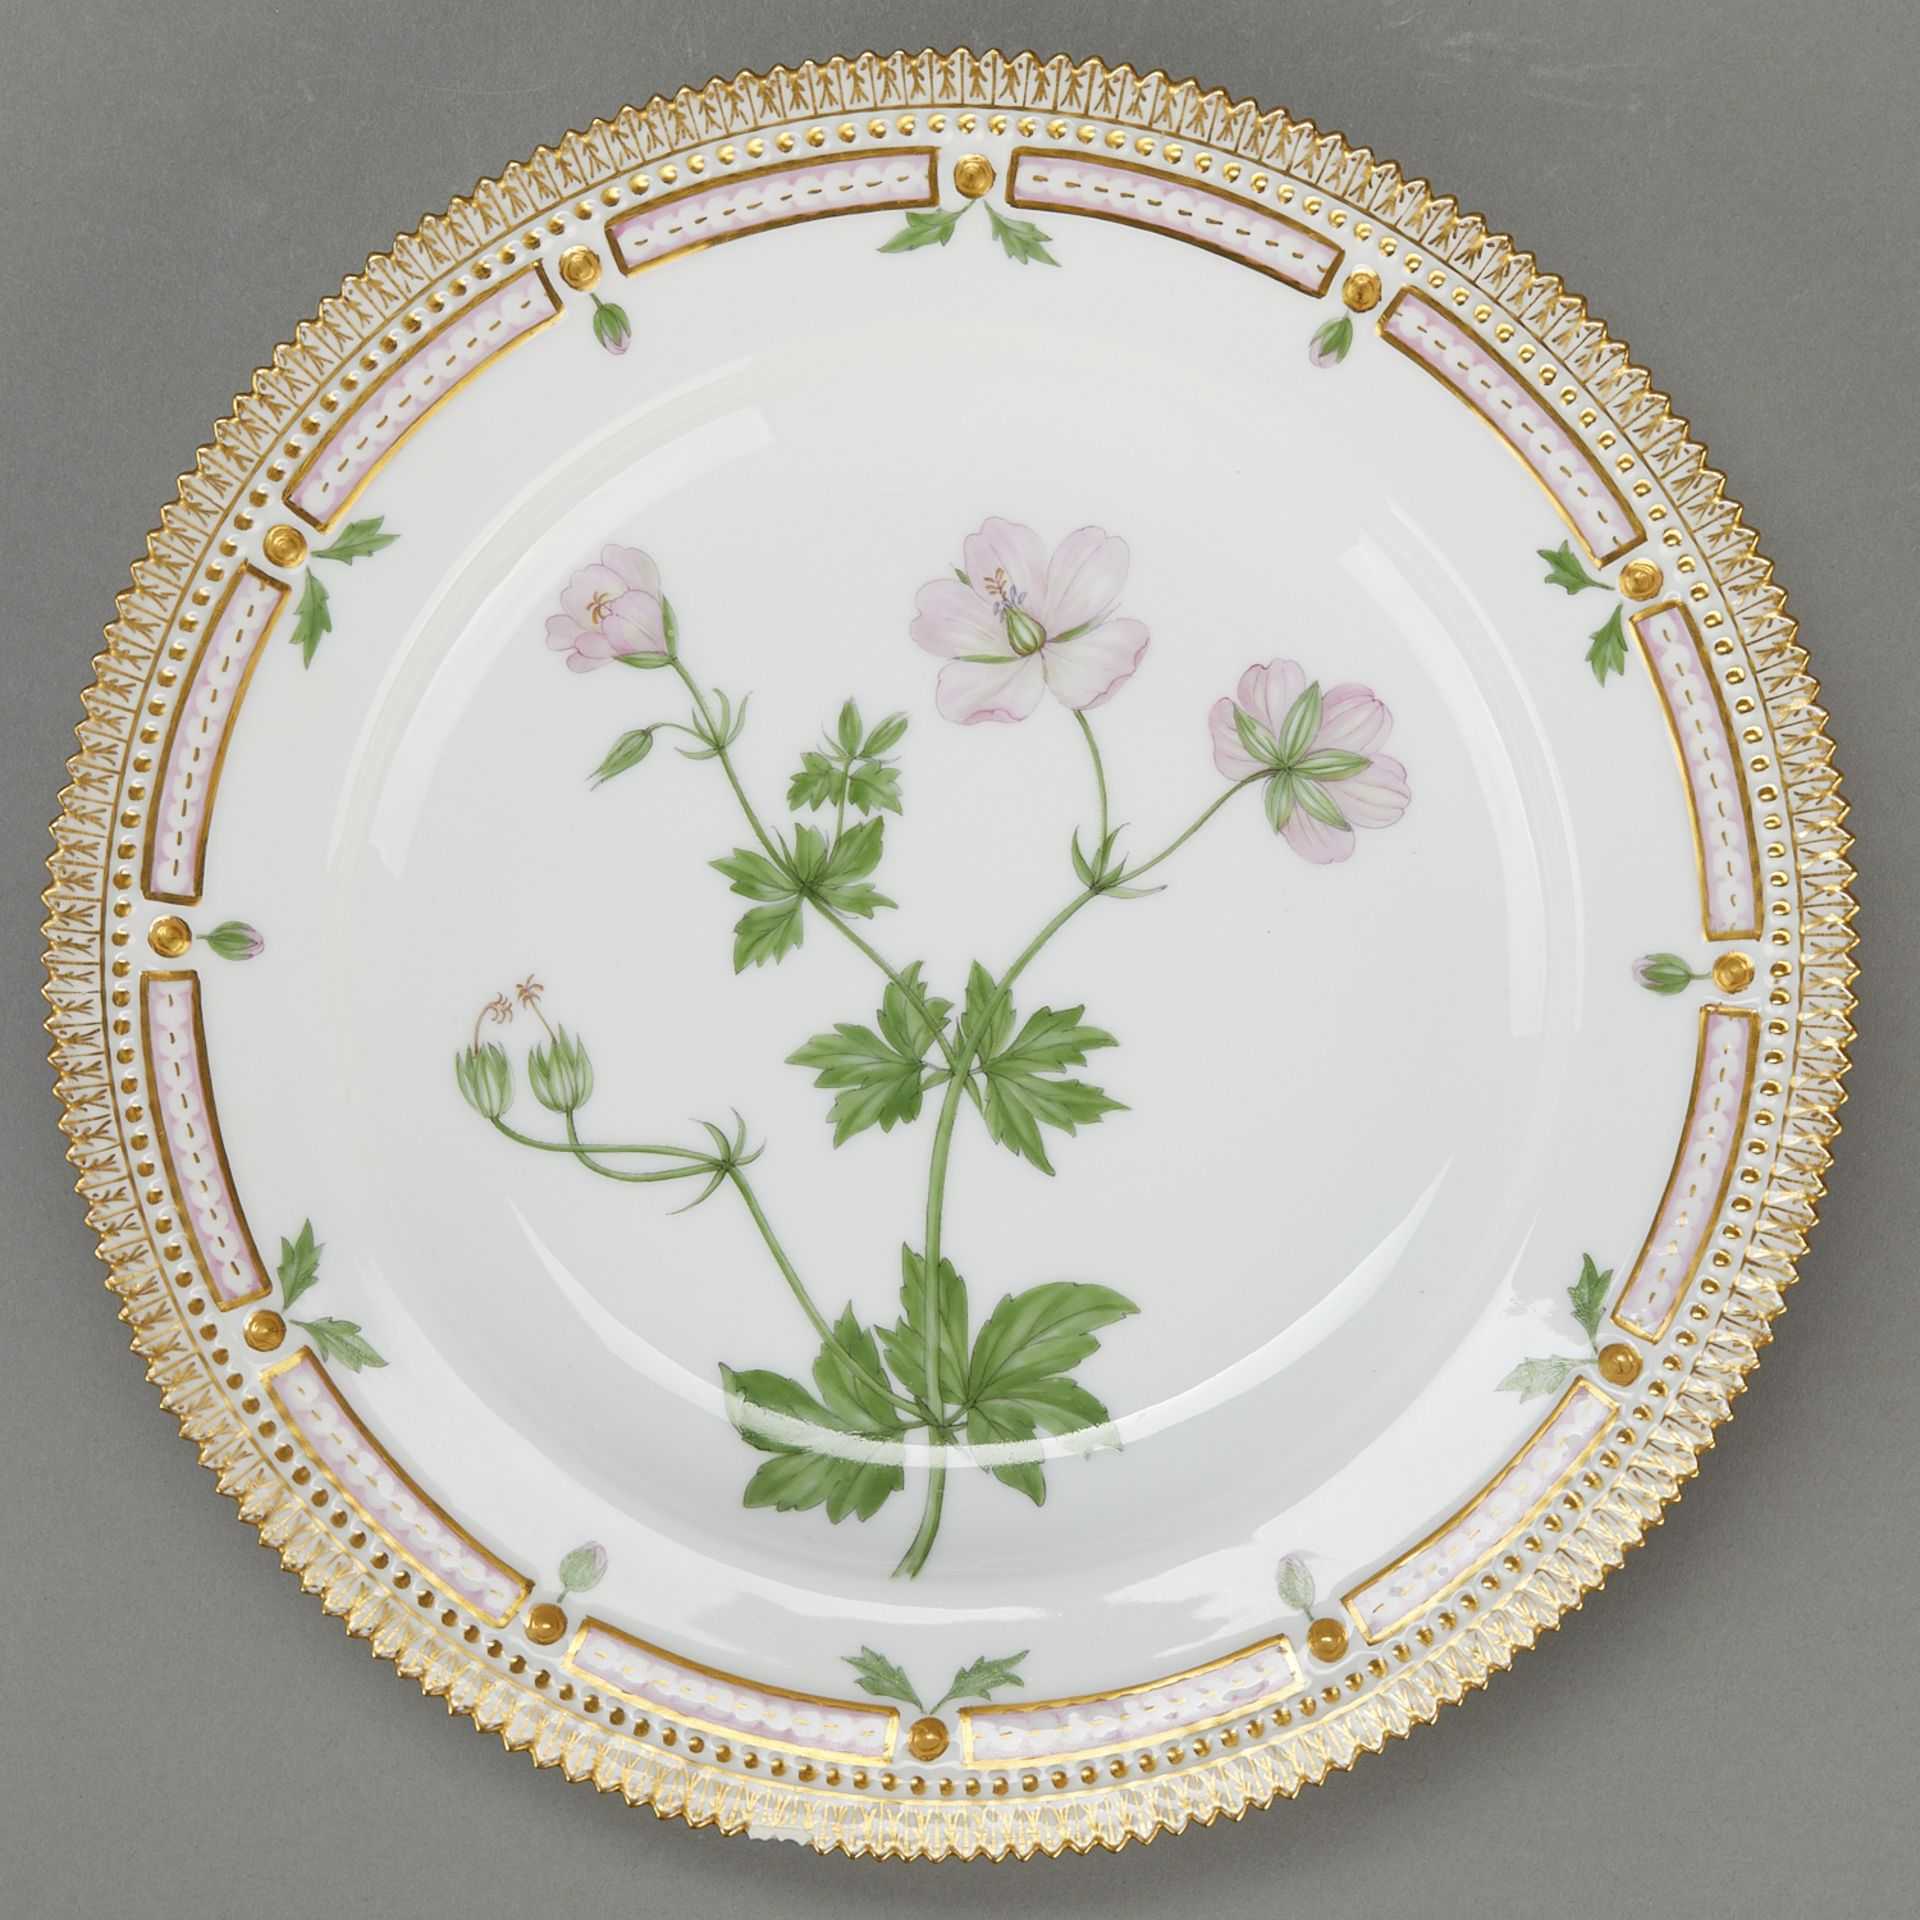 Set 11 Flora Danica Luncheon Plates - Image 19 of 22